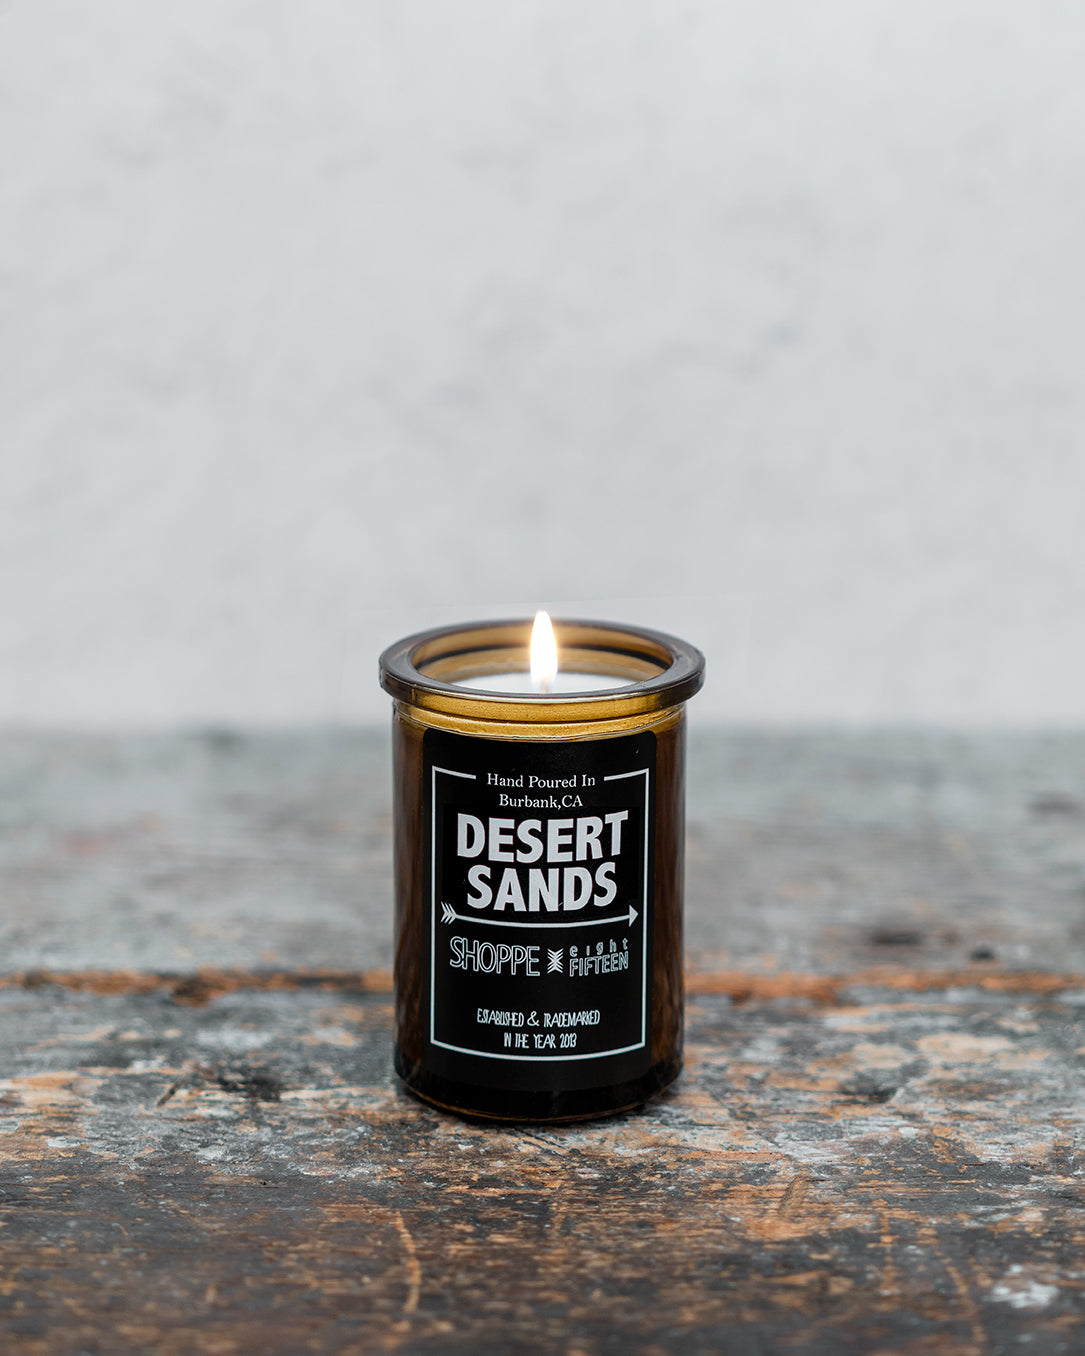 Lit Desert Sands amber glass candle on wooden shelf